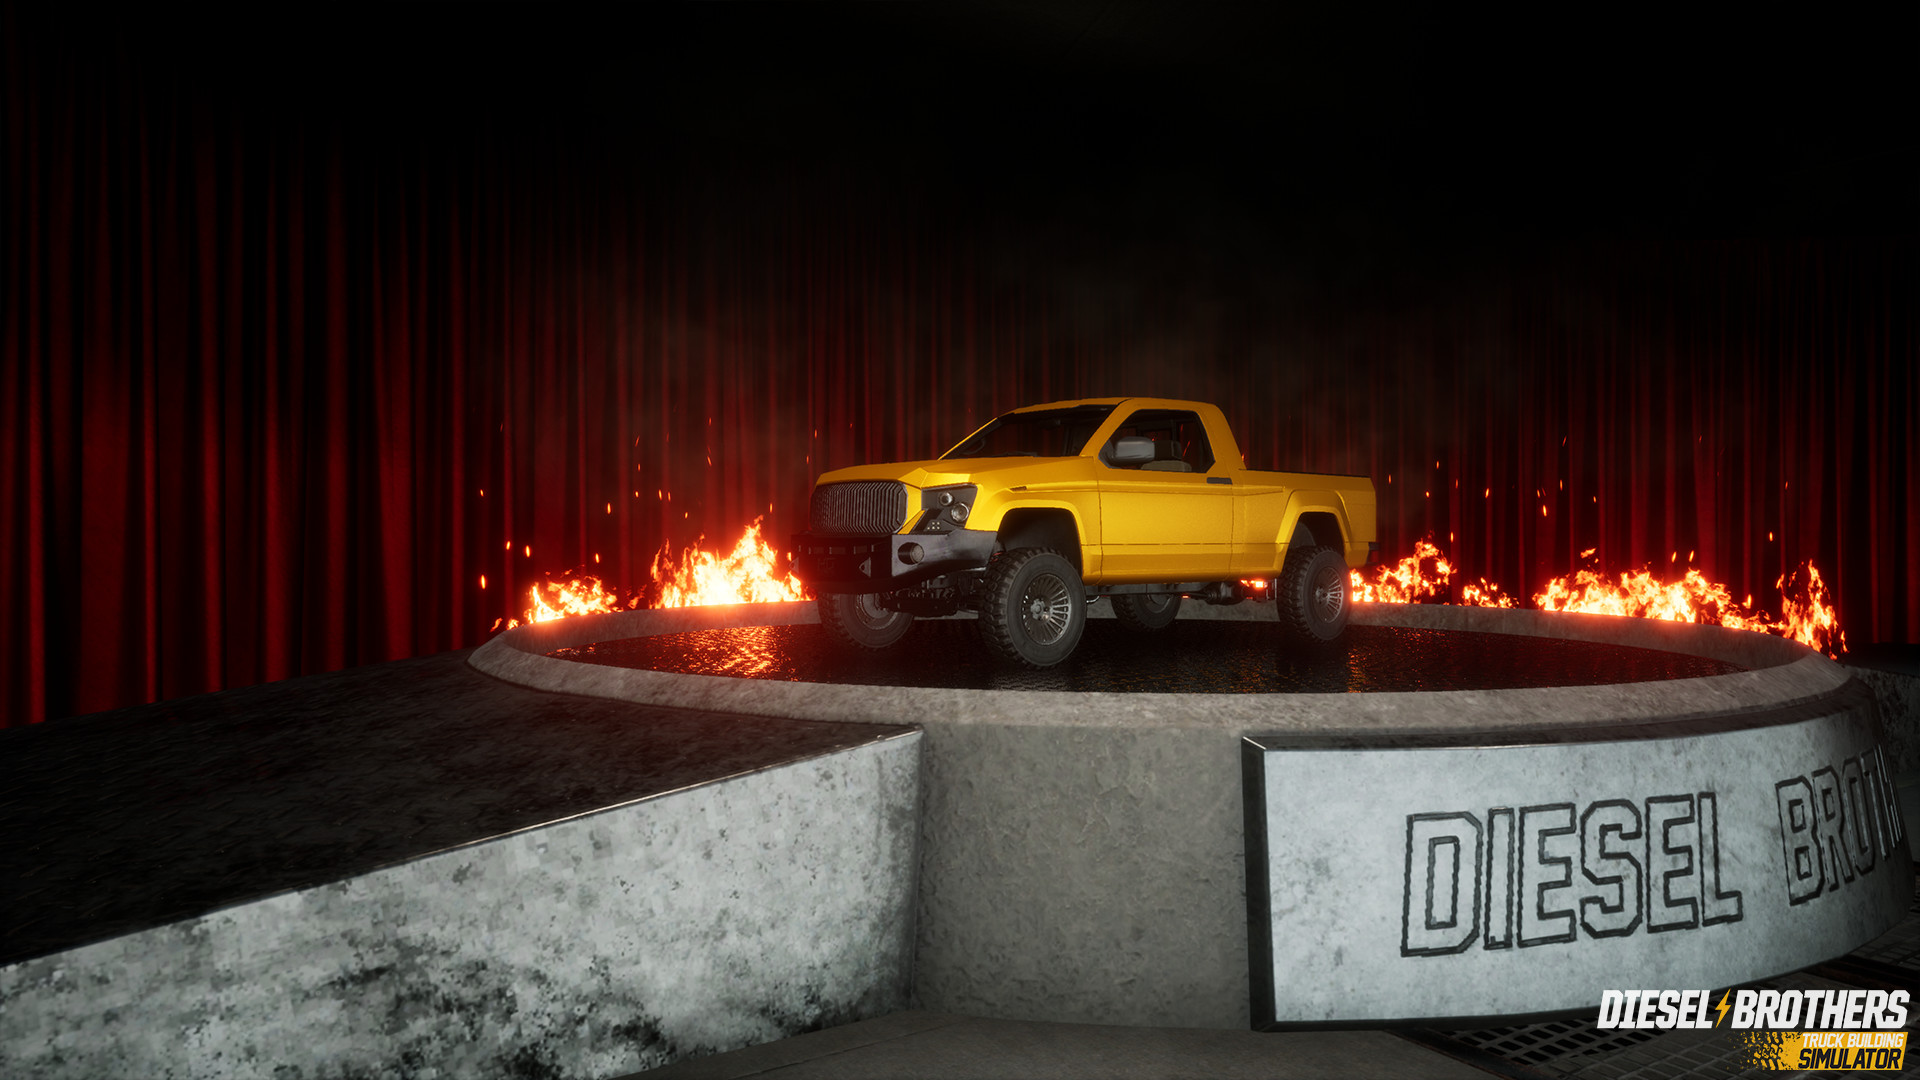 Diesel Brothers: Truck Building Simulator Free Download